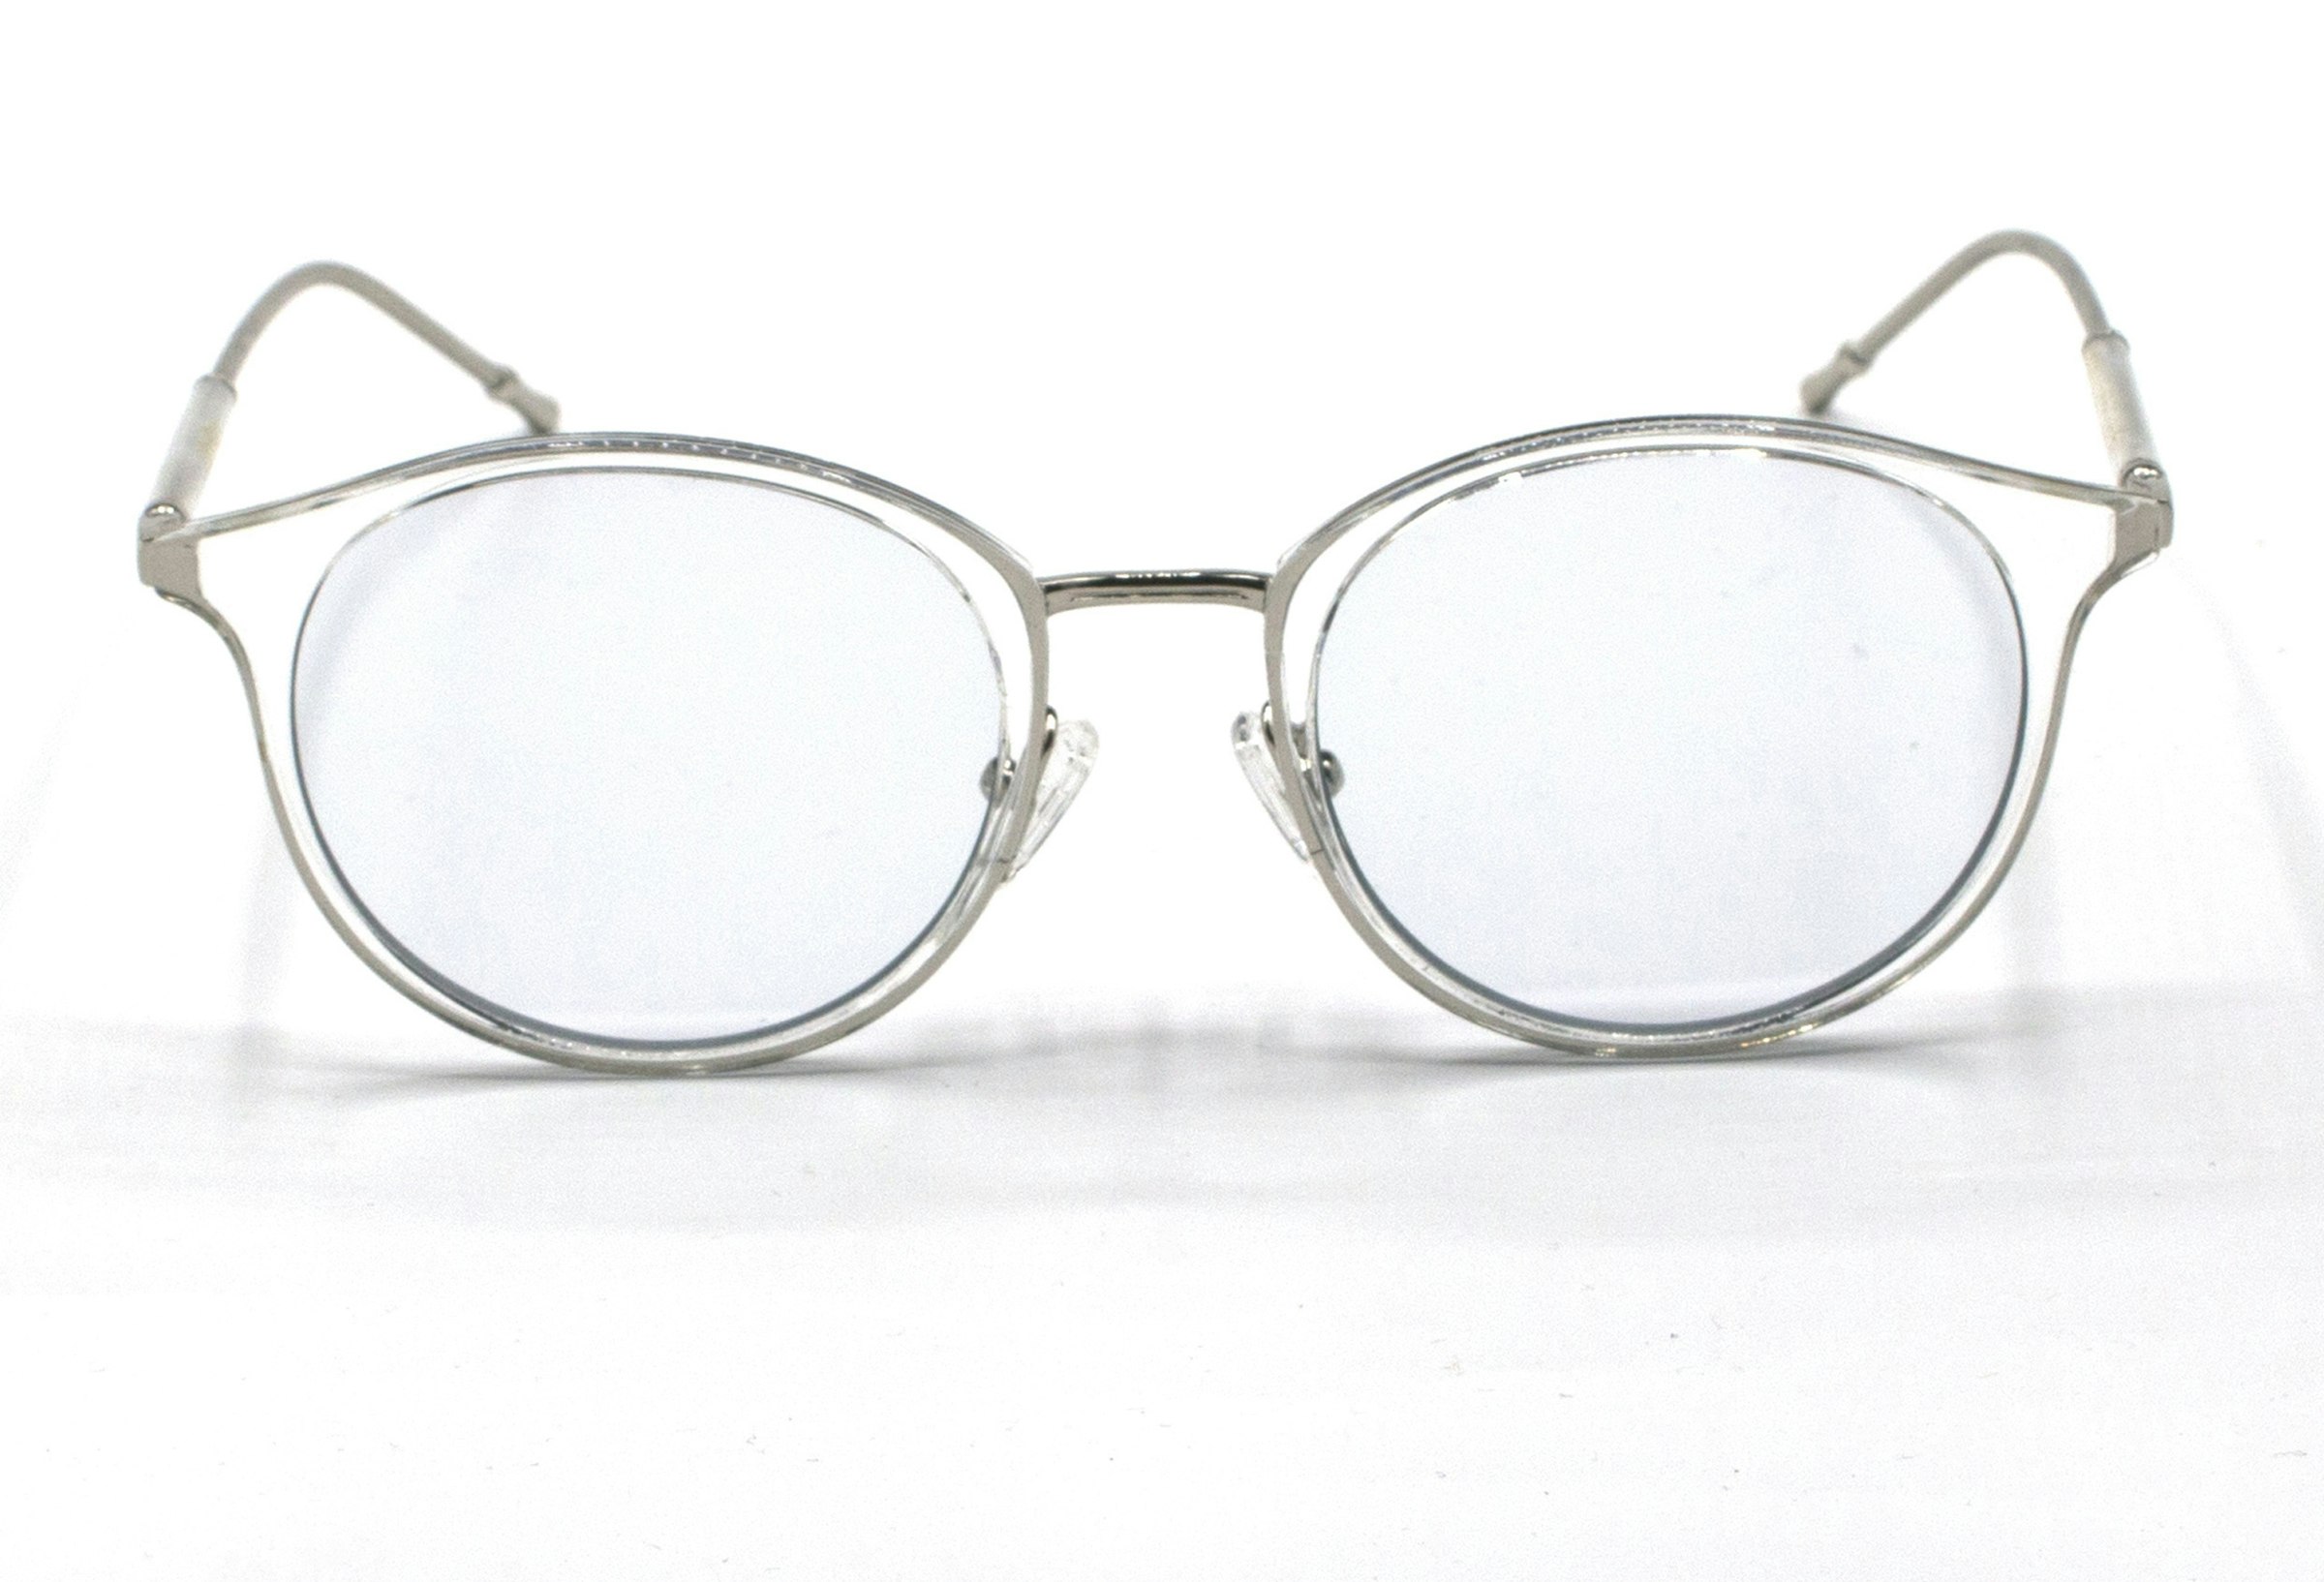 EREBO X-Clear＆Silver/Clear CPL（UV Protection Sunglasses）　13,200円（税込）一番人気のコンビネーションモデル EREBO X